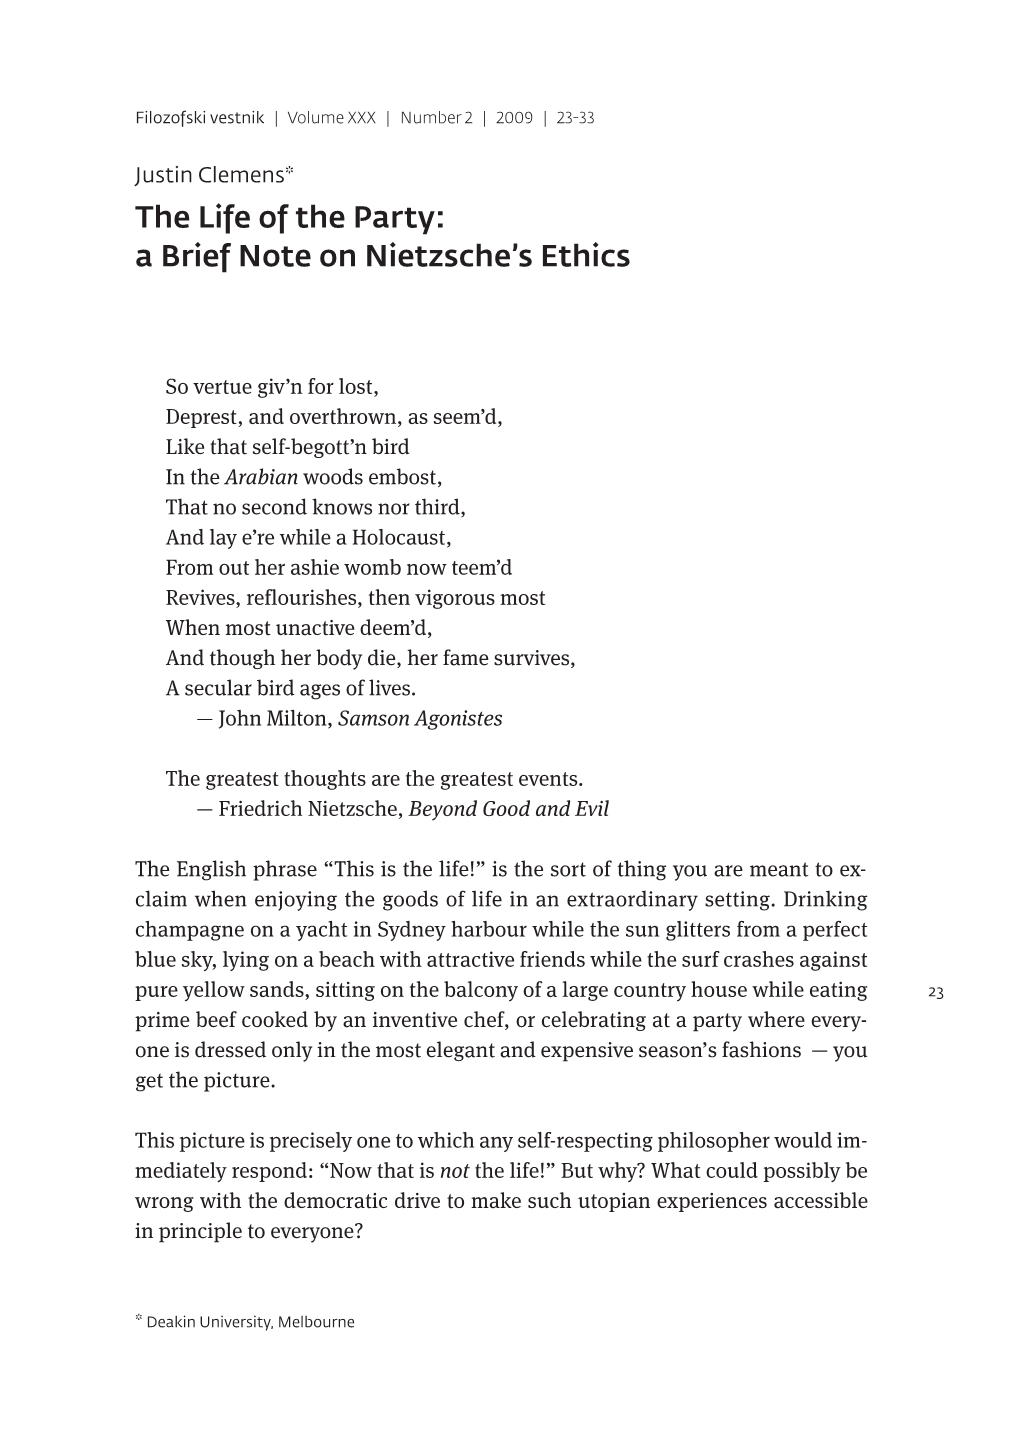 A Brief Note on Nietzsche's Ethics